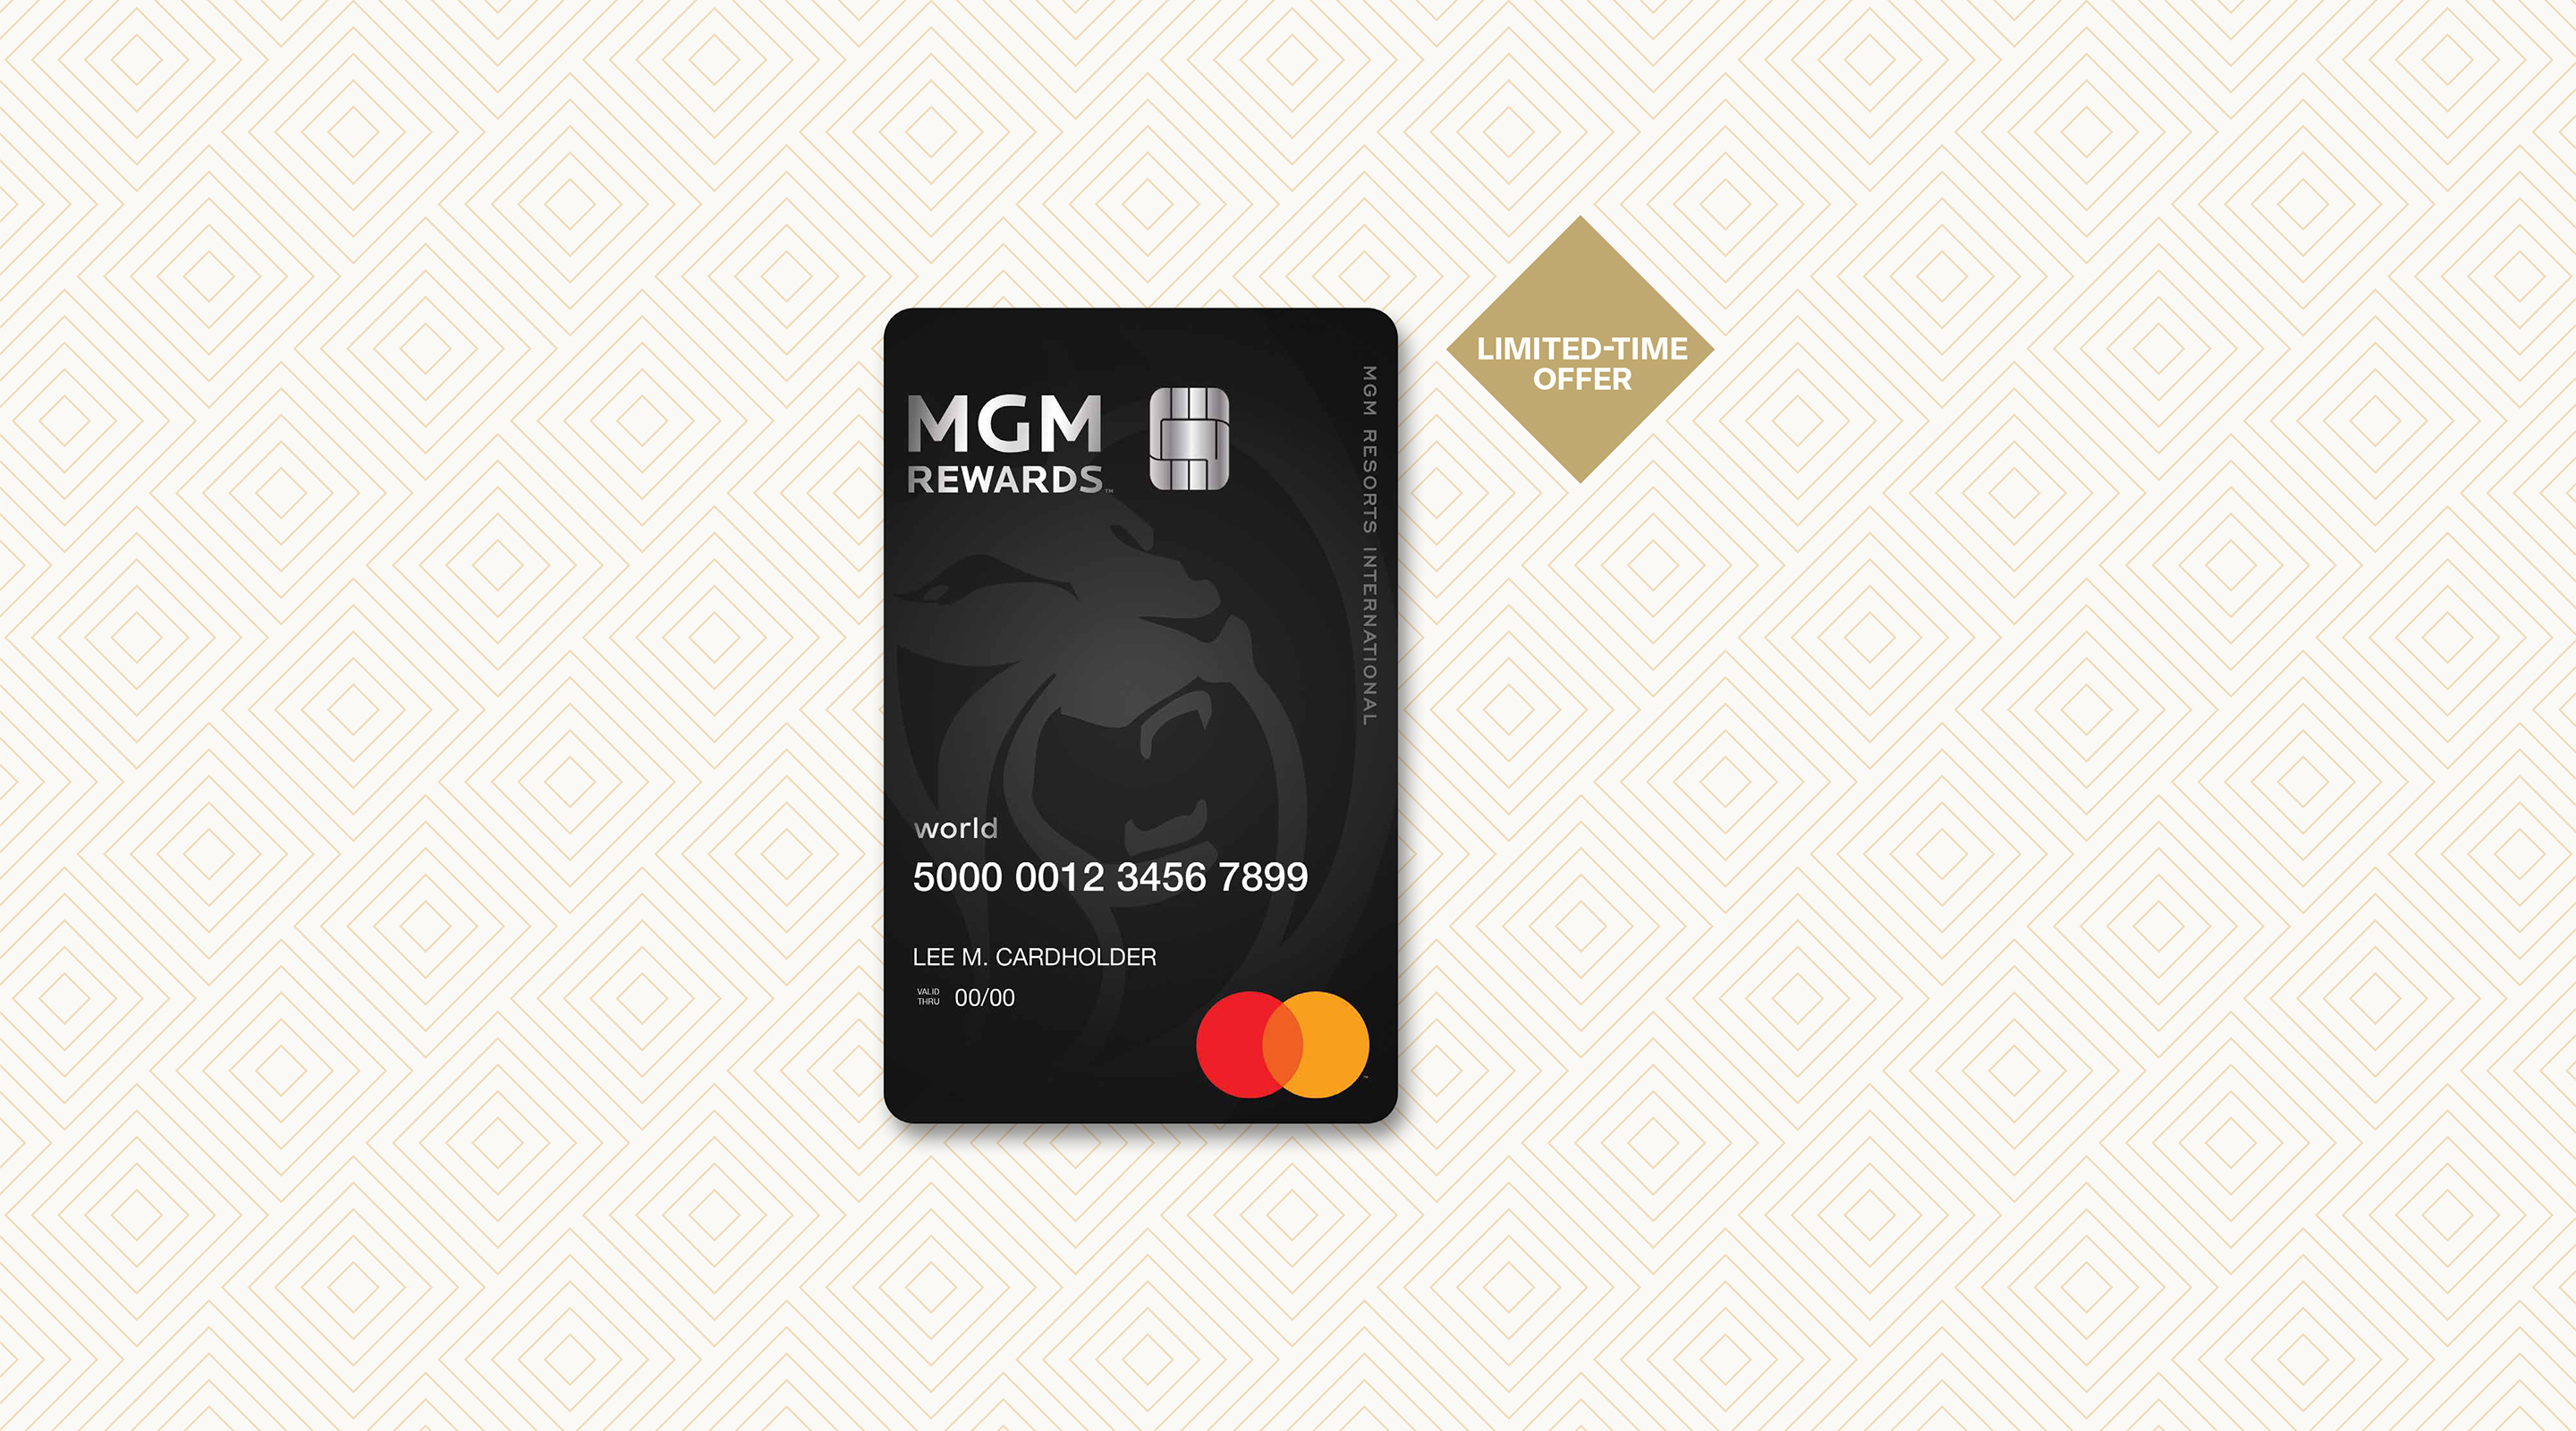 mgm-rewards-mastercard-nov-23-lto